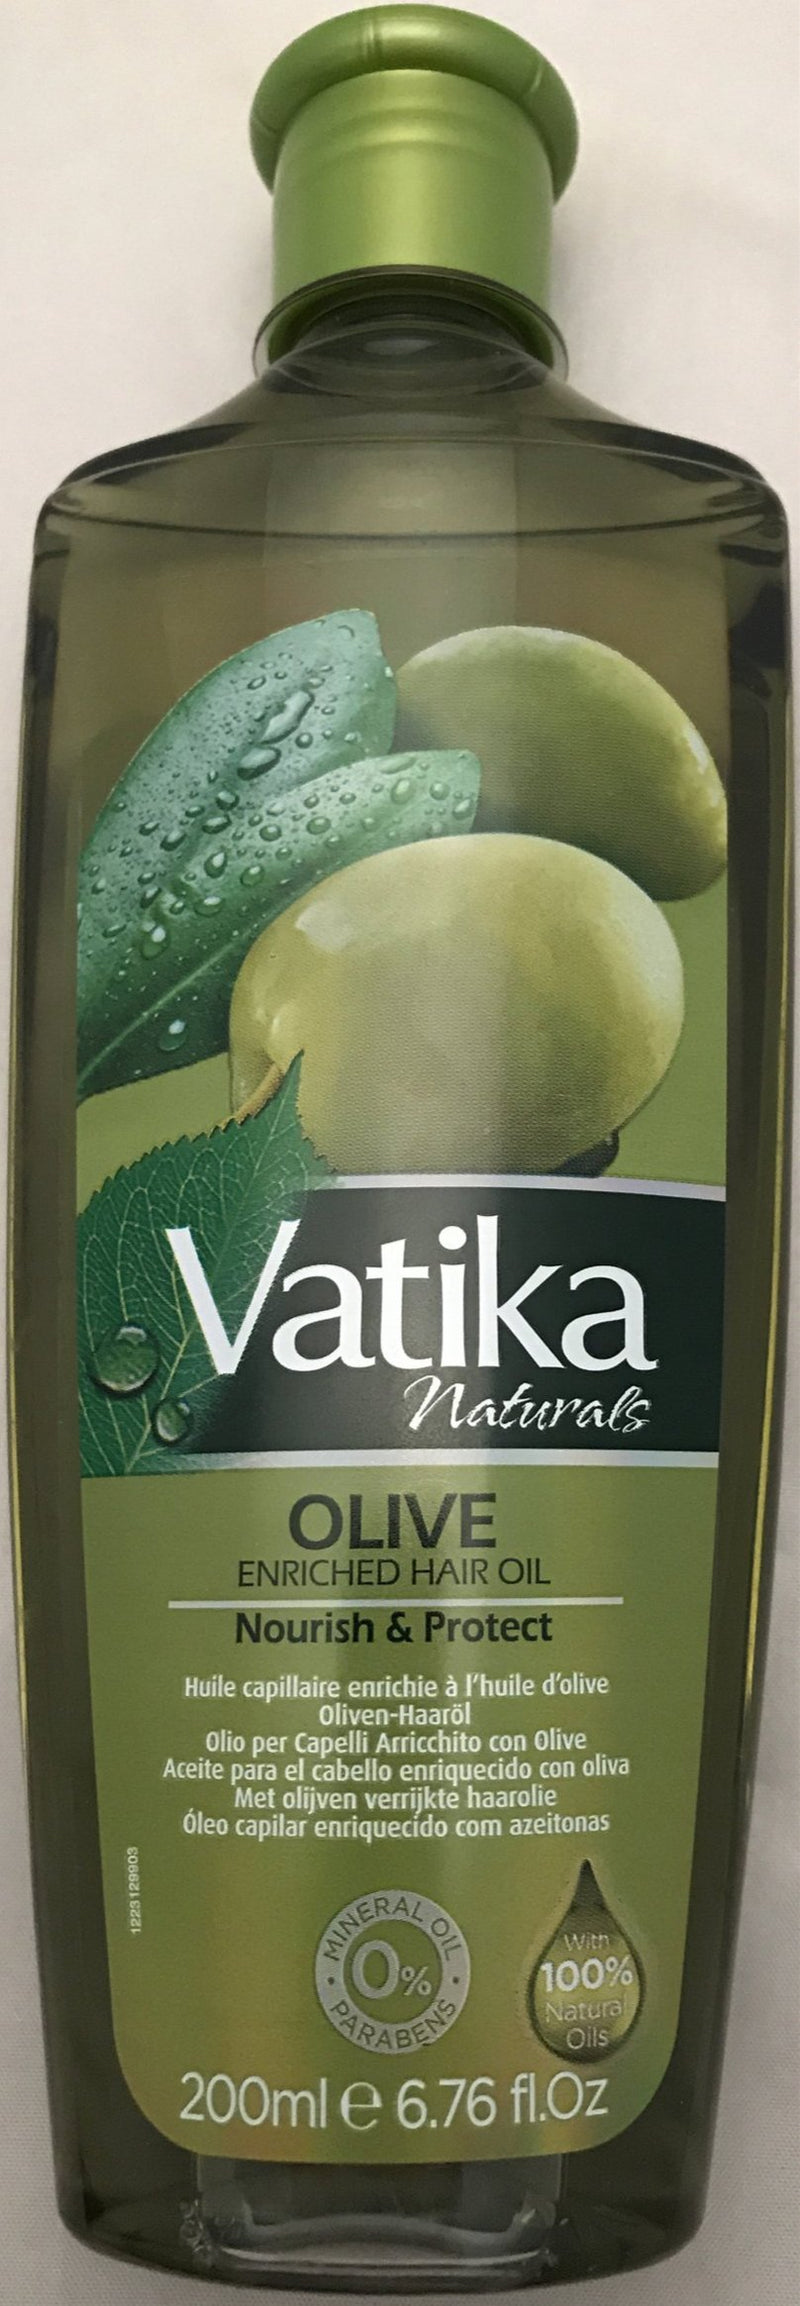 Vatika Olive Hair Oil - 200ml - ExoticEstore